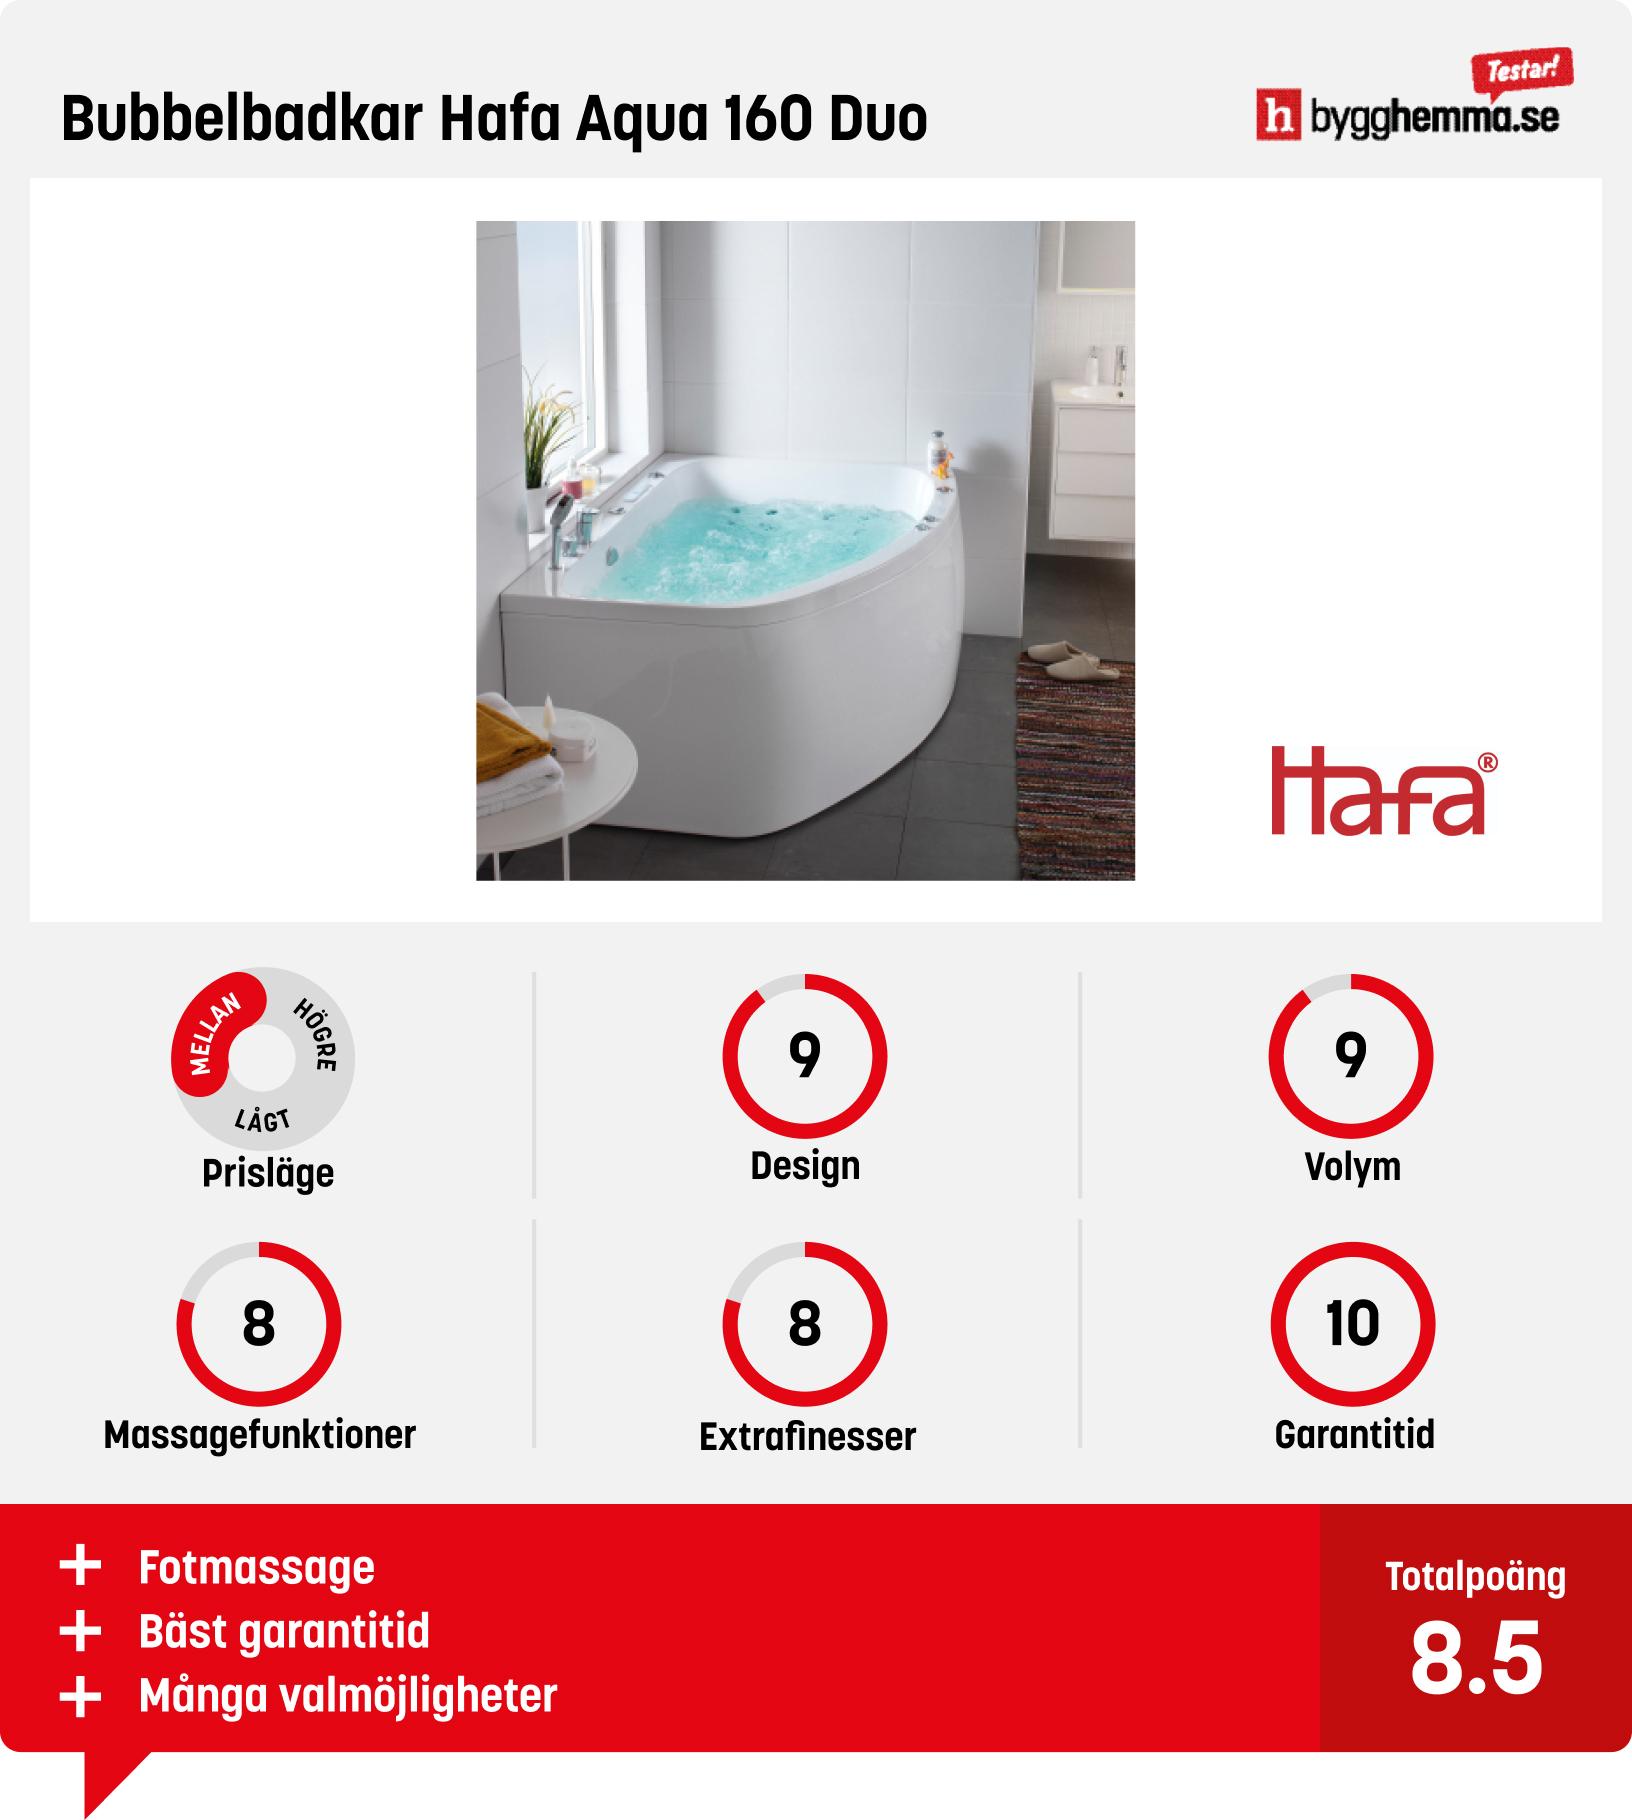 Bubbelbadkar bäst i test - Bubbelbadkar Hafa Aqua 160 Duo